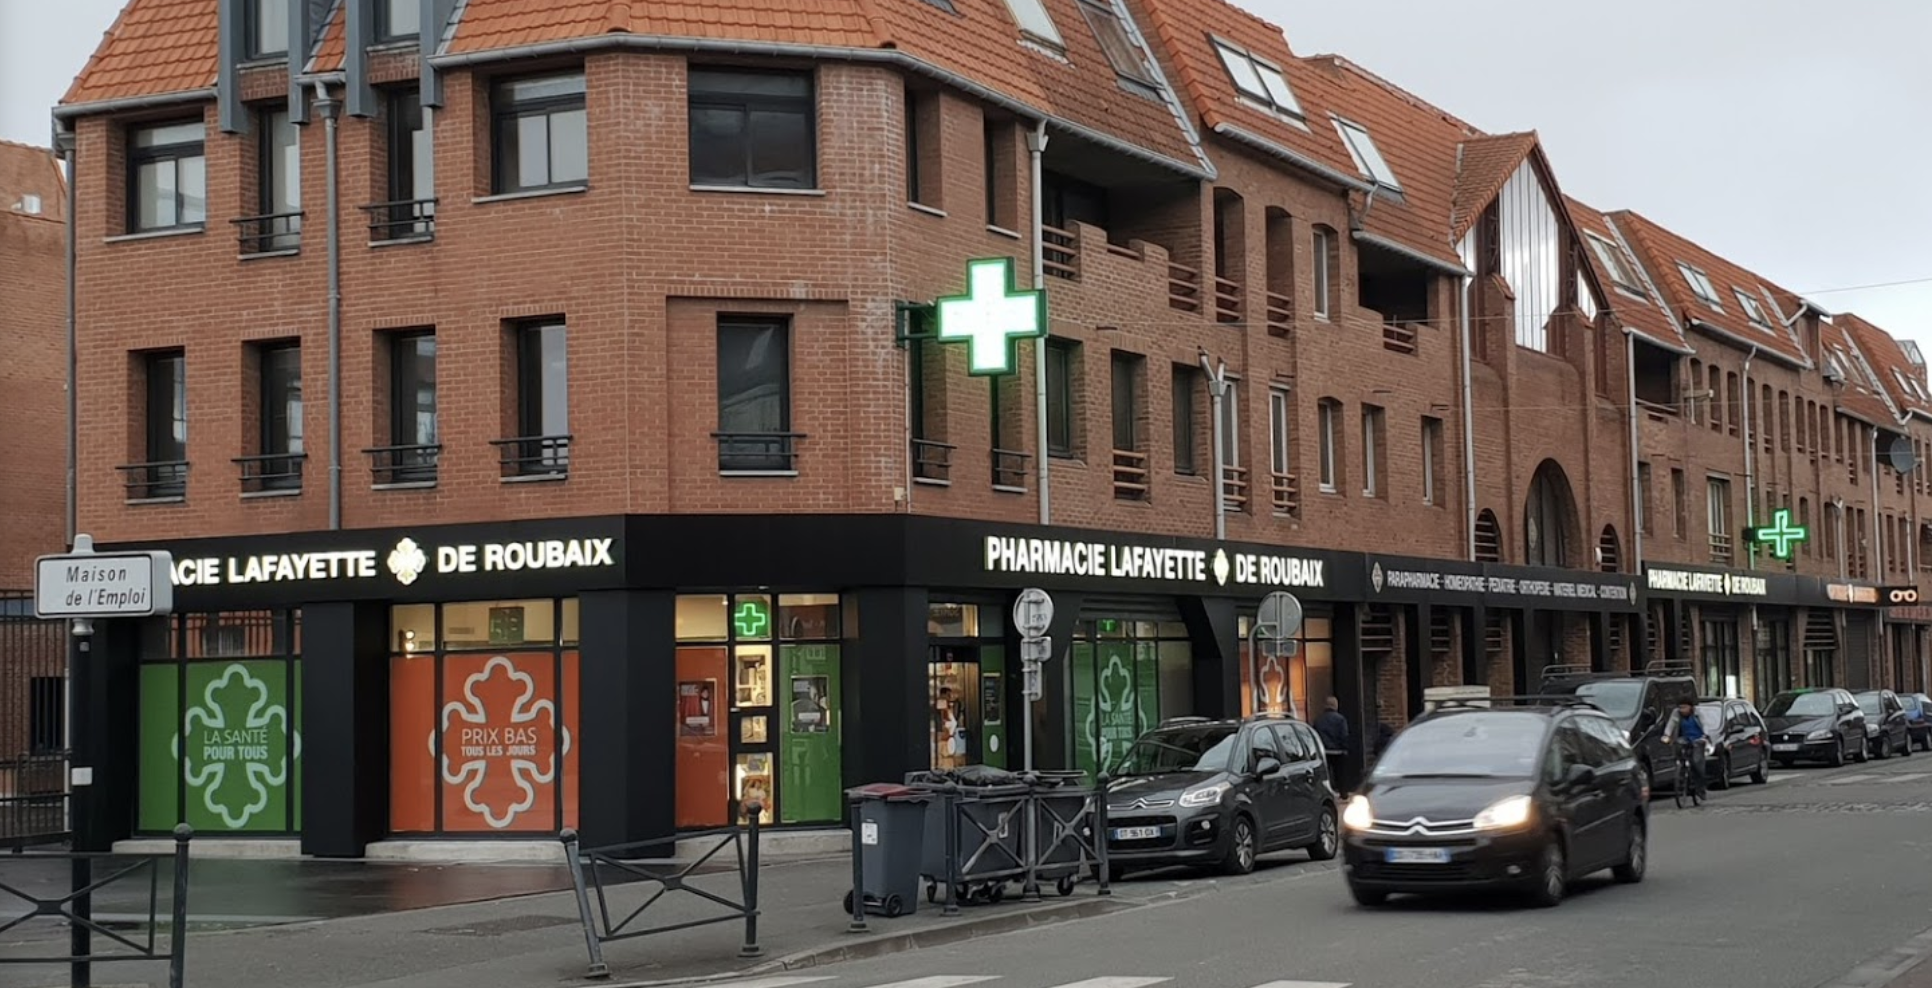 Pharmacie Lafayette de Roubaix